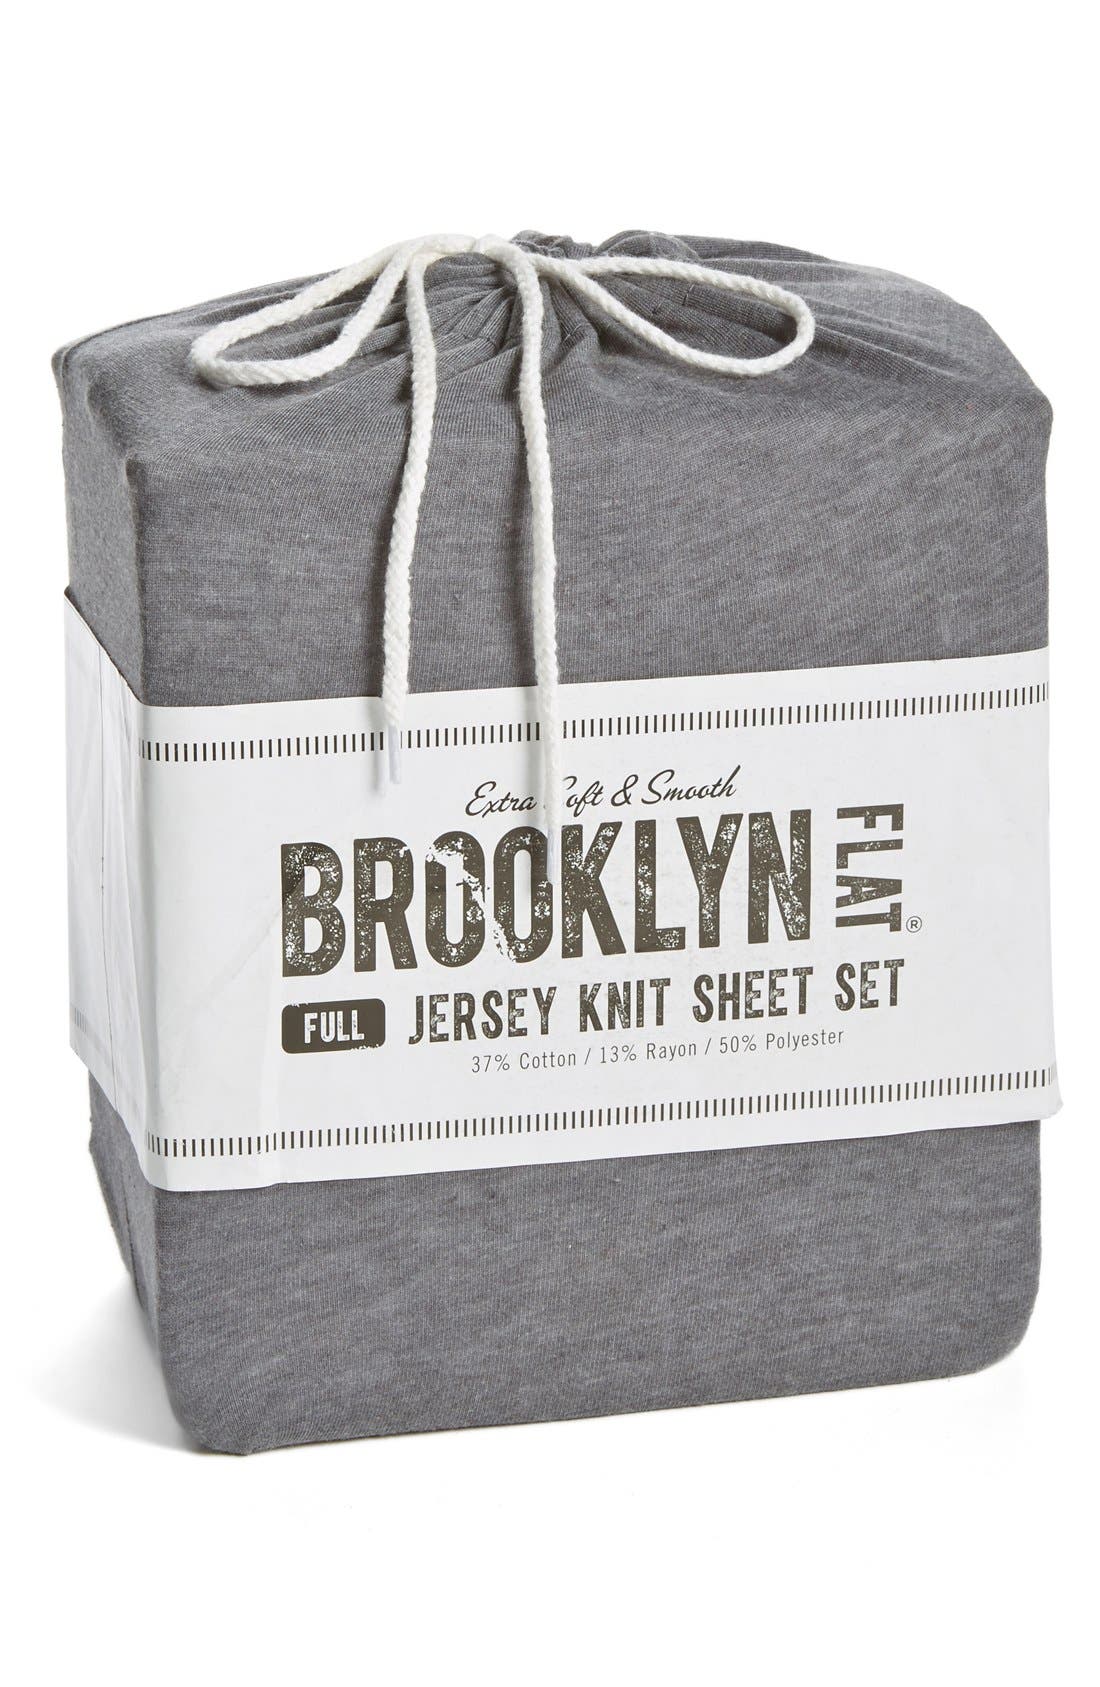 Brooklyn Flat Jersey Knit Sheet Set 